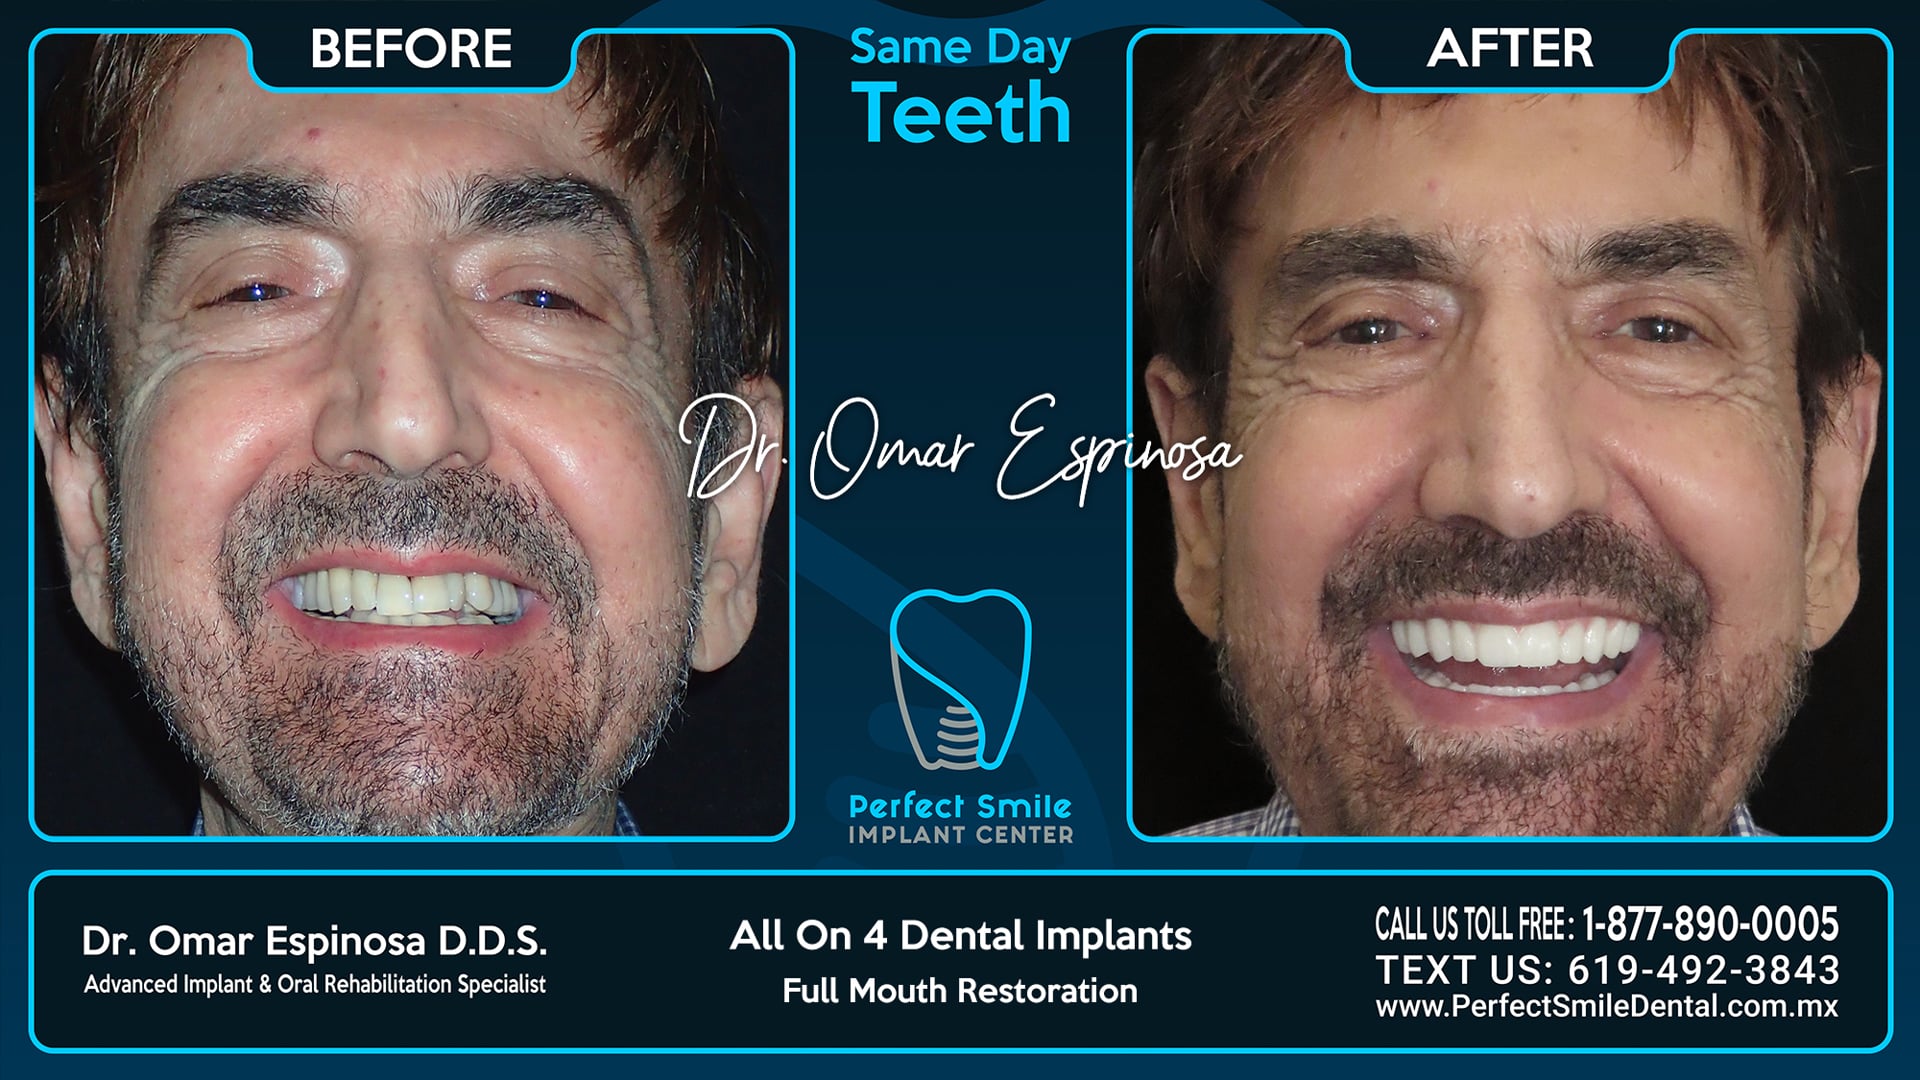 All On 4 Dental Implants Top & Bottom - Perfect Smile Implant Center - Tijuana, Mexico